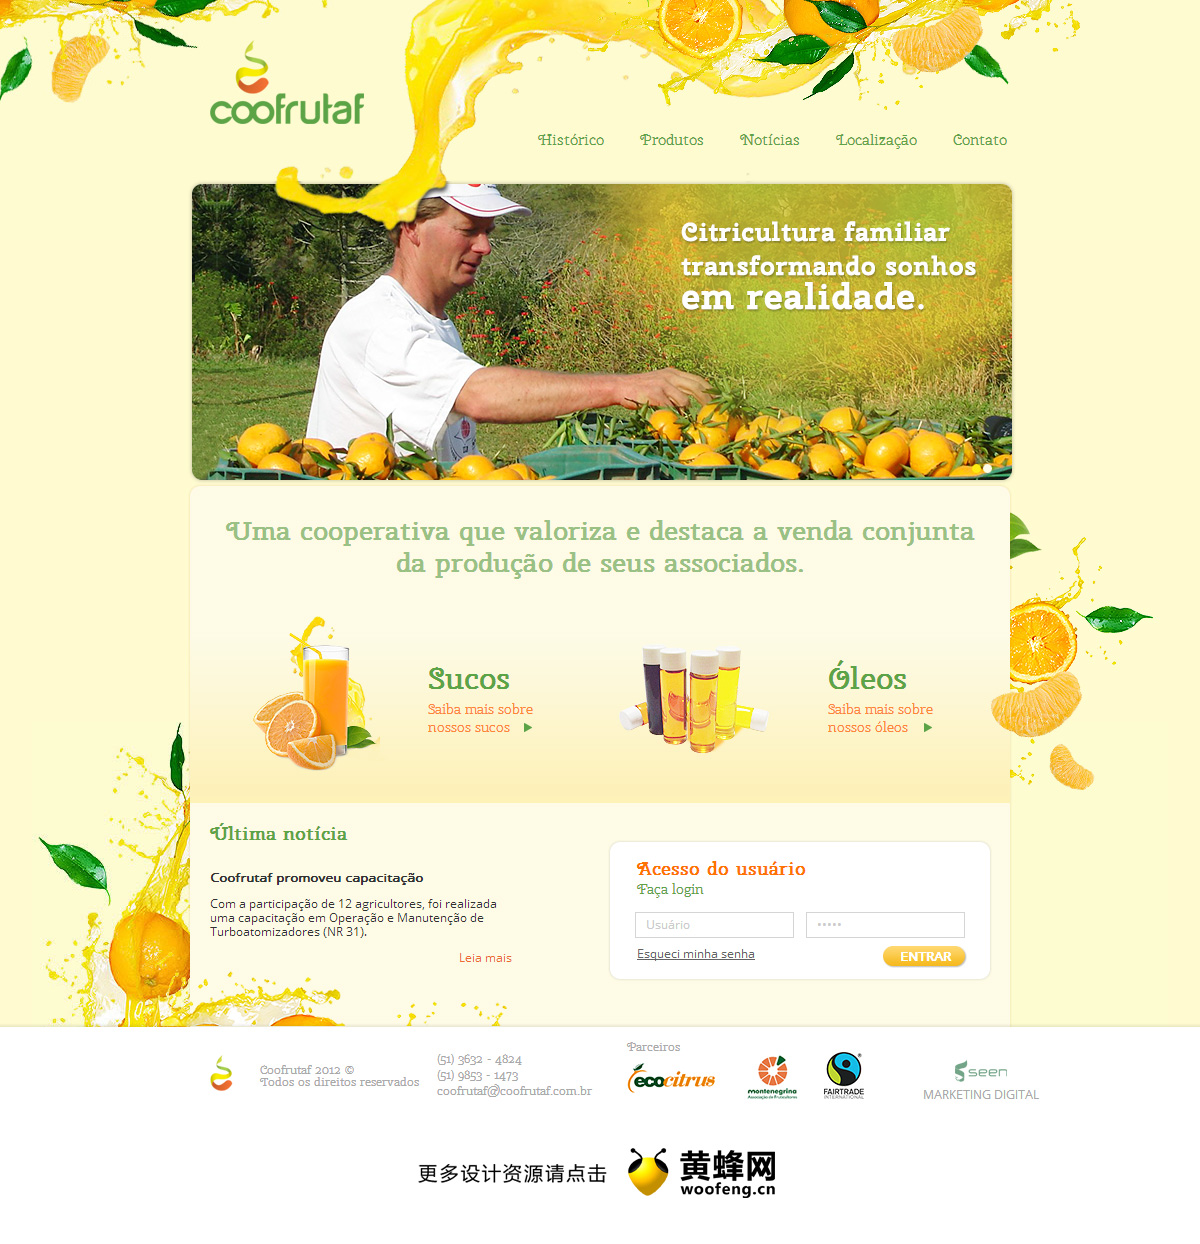 Coofrutaf水果生产销售，来源自黄蜂网https://woofeng.cn/web/